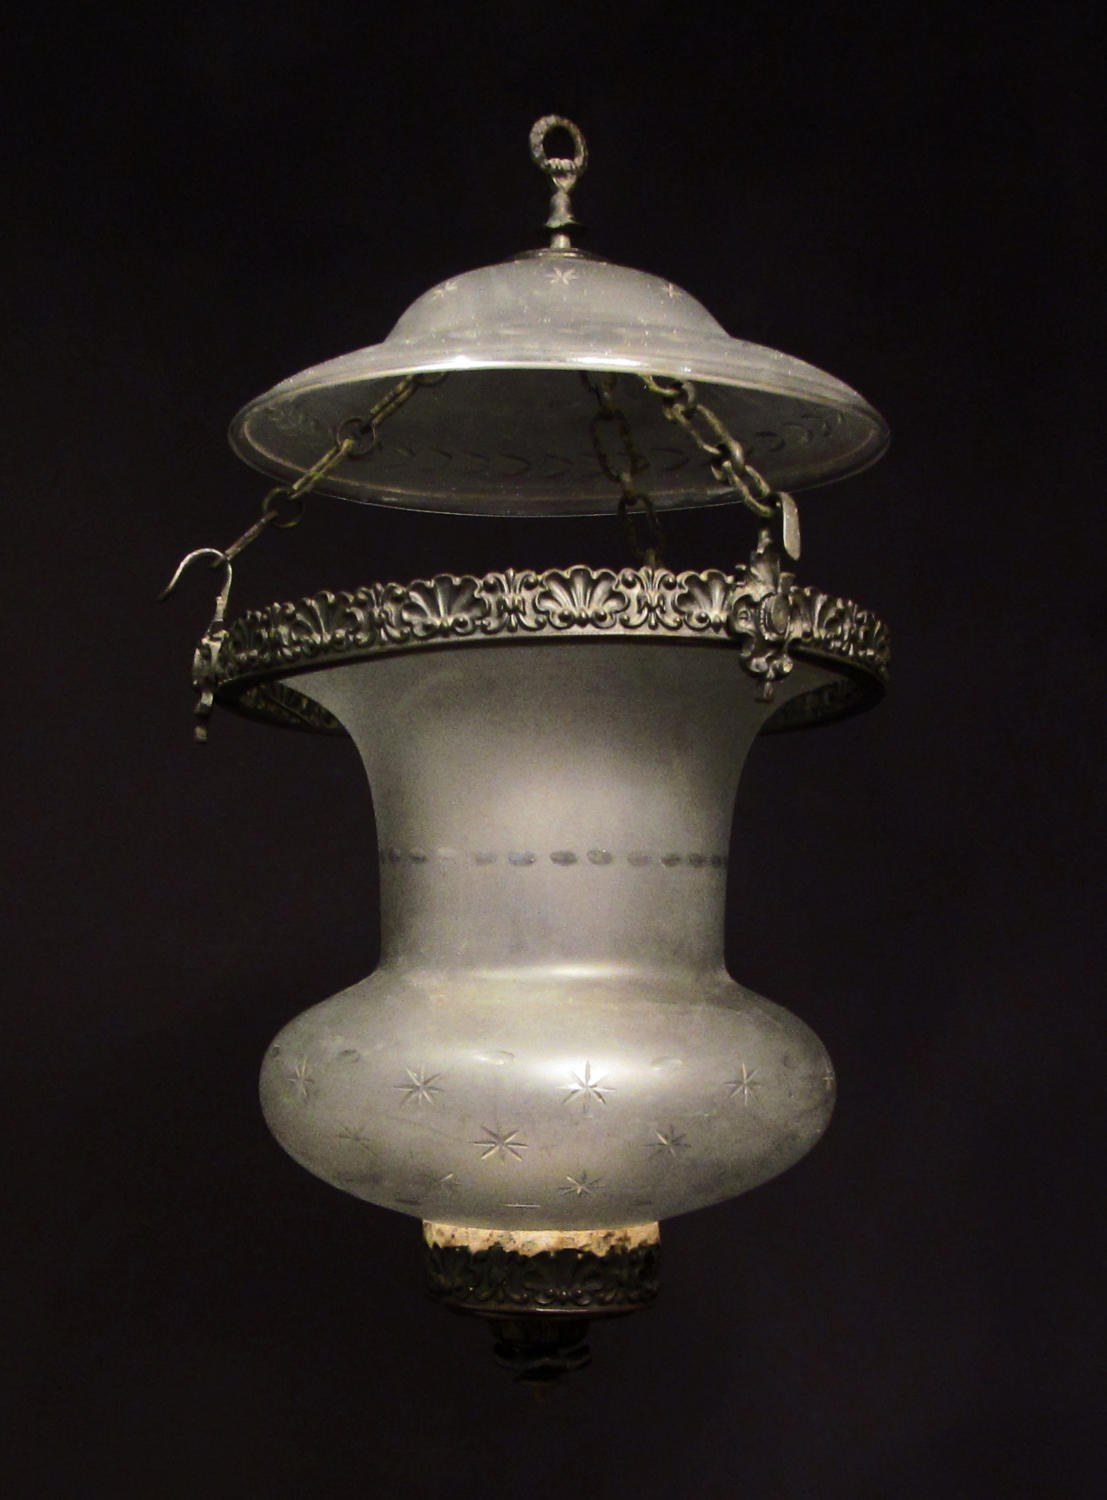 A charming bell jar lantern